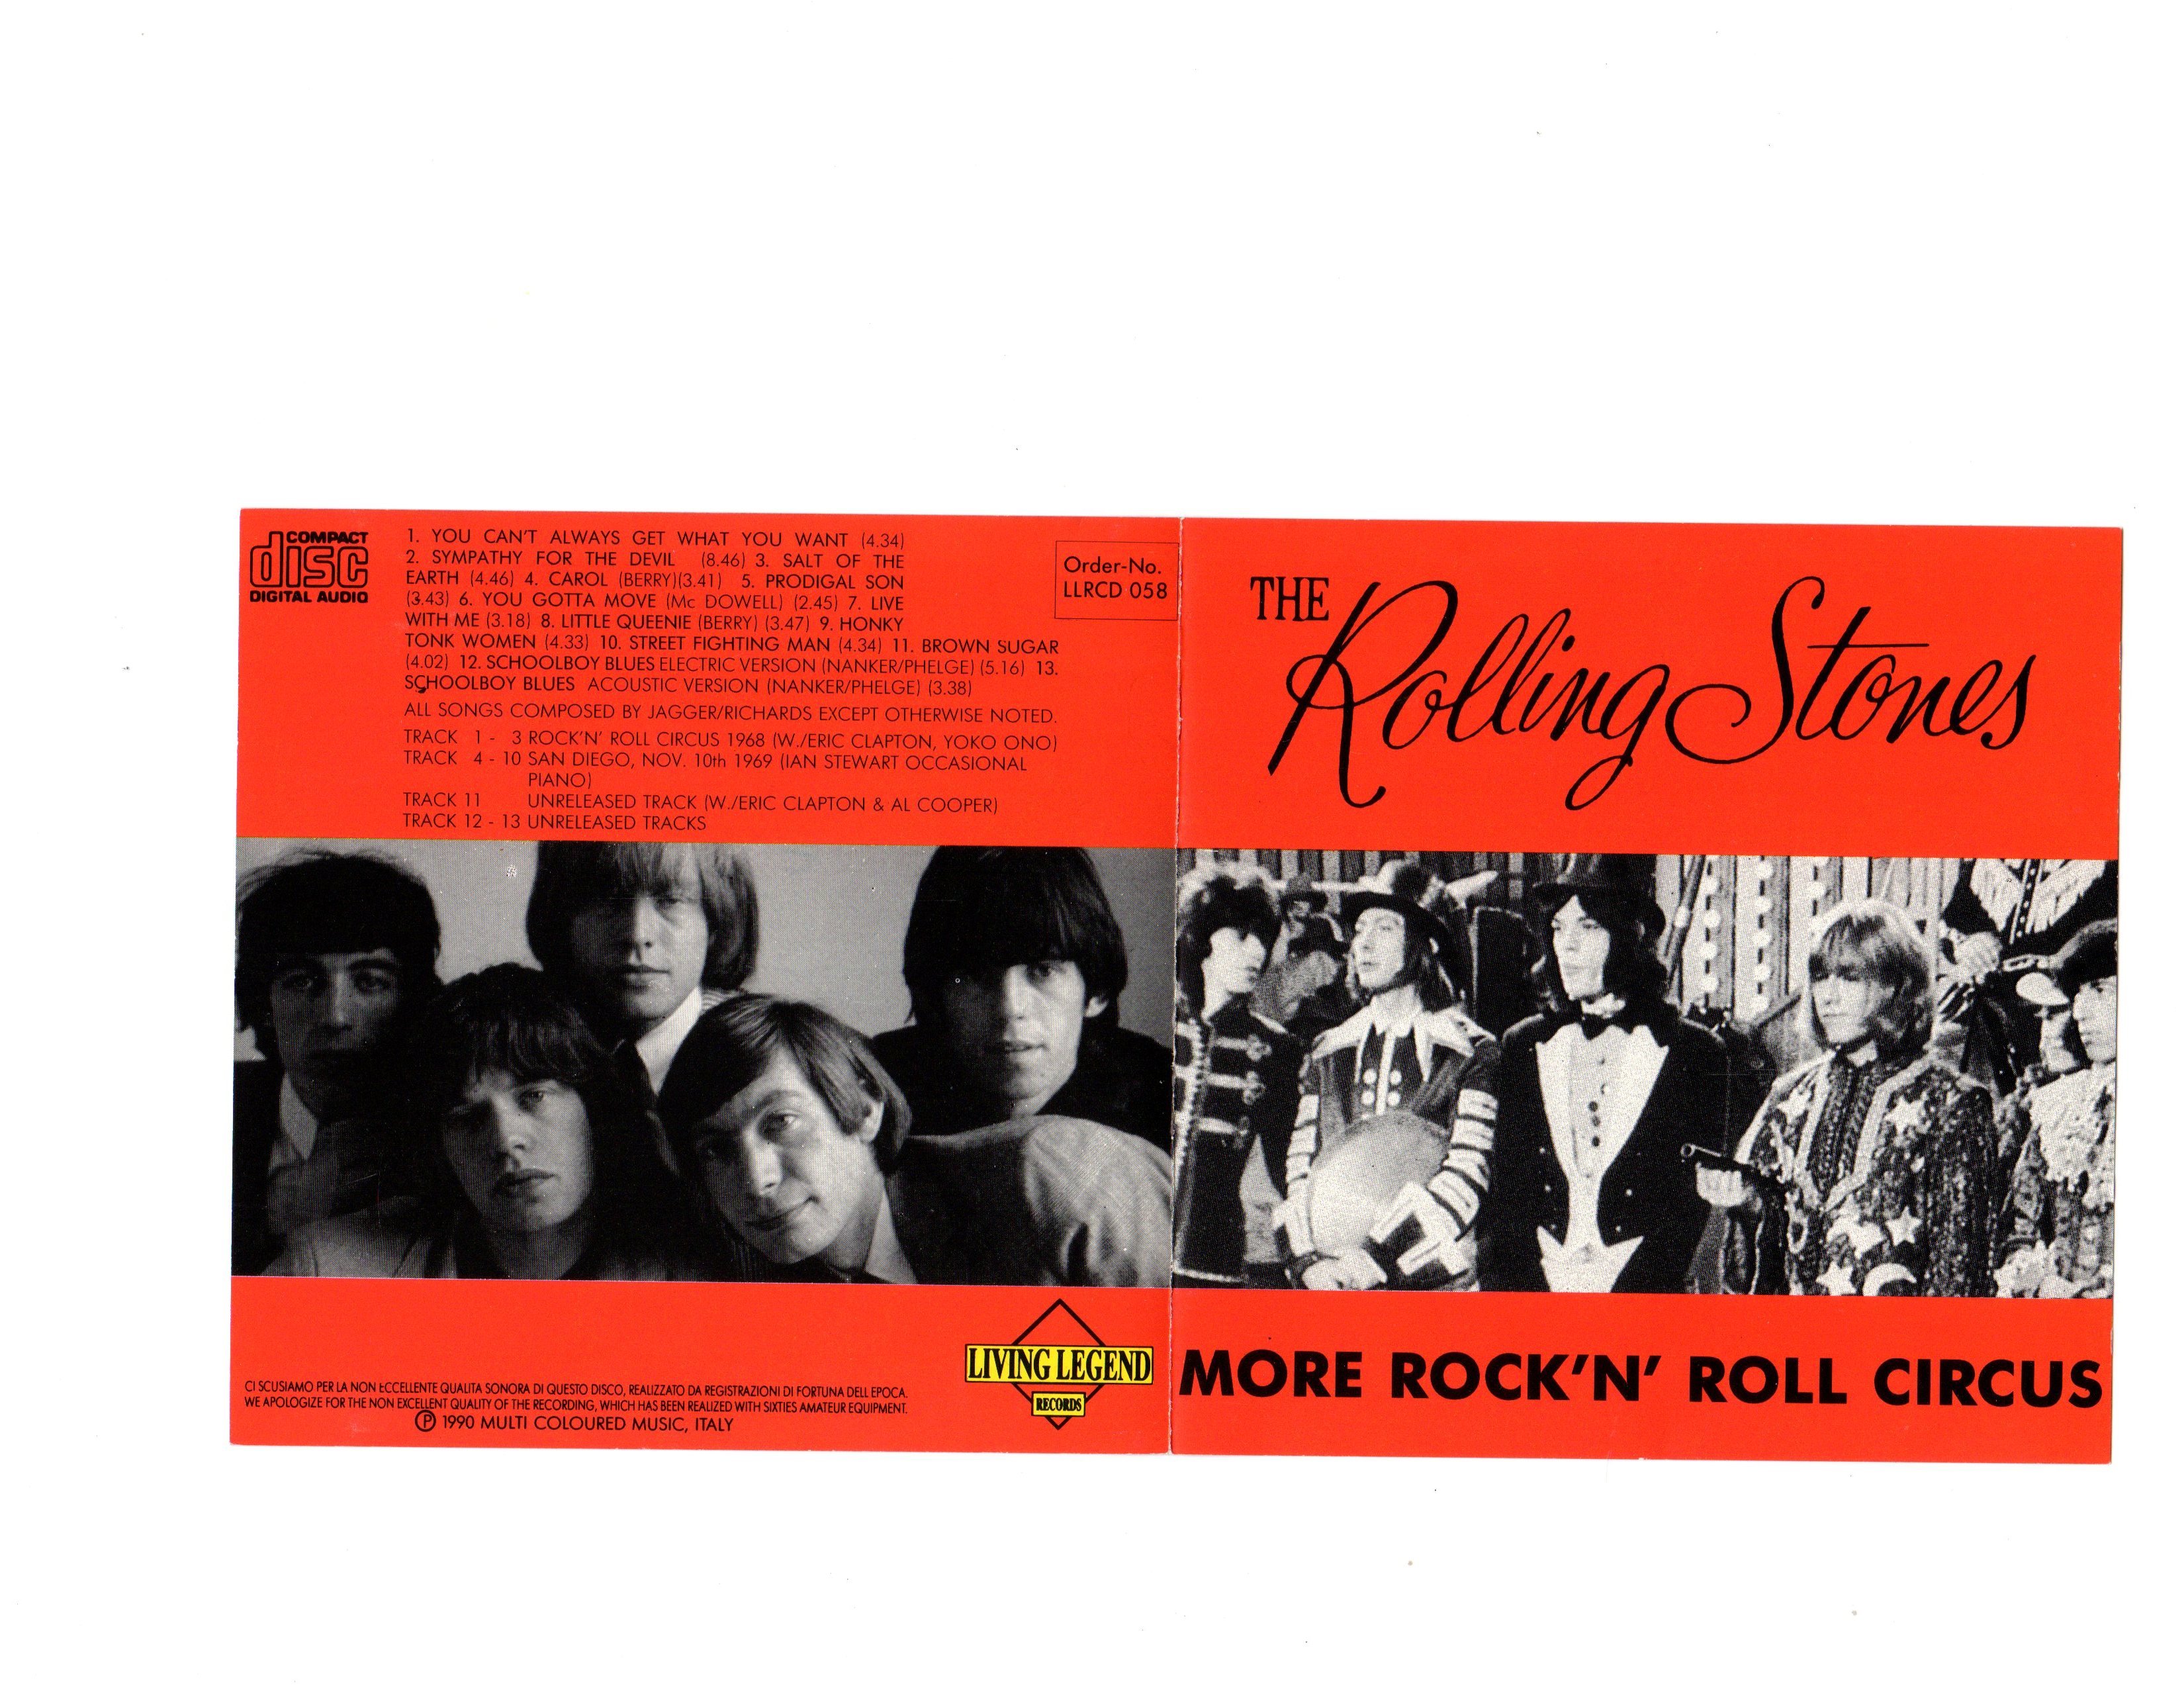 RollingStones196xMoreRockNRollCircus.jpg